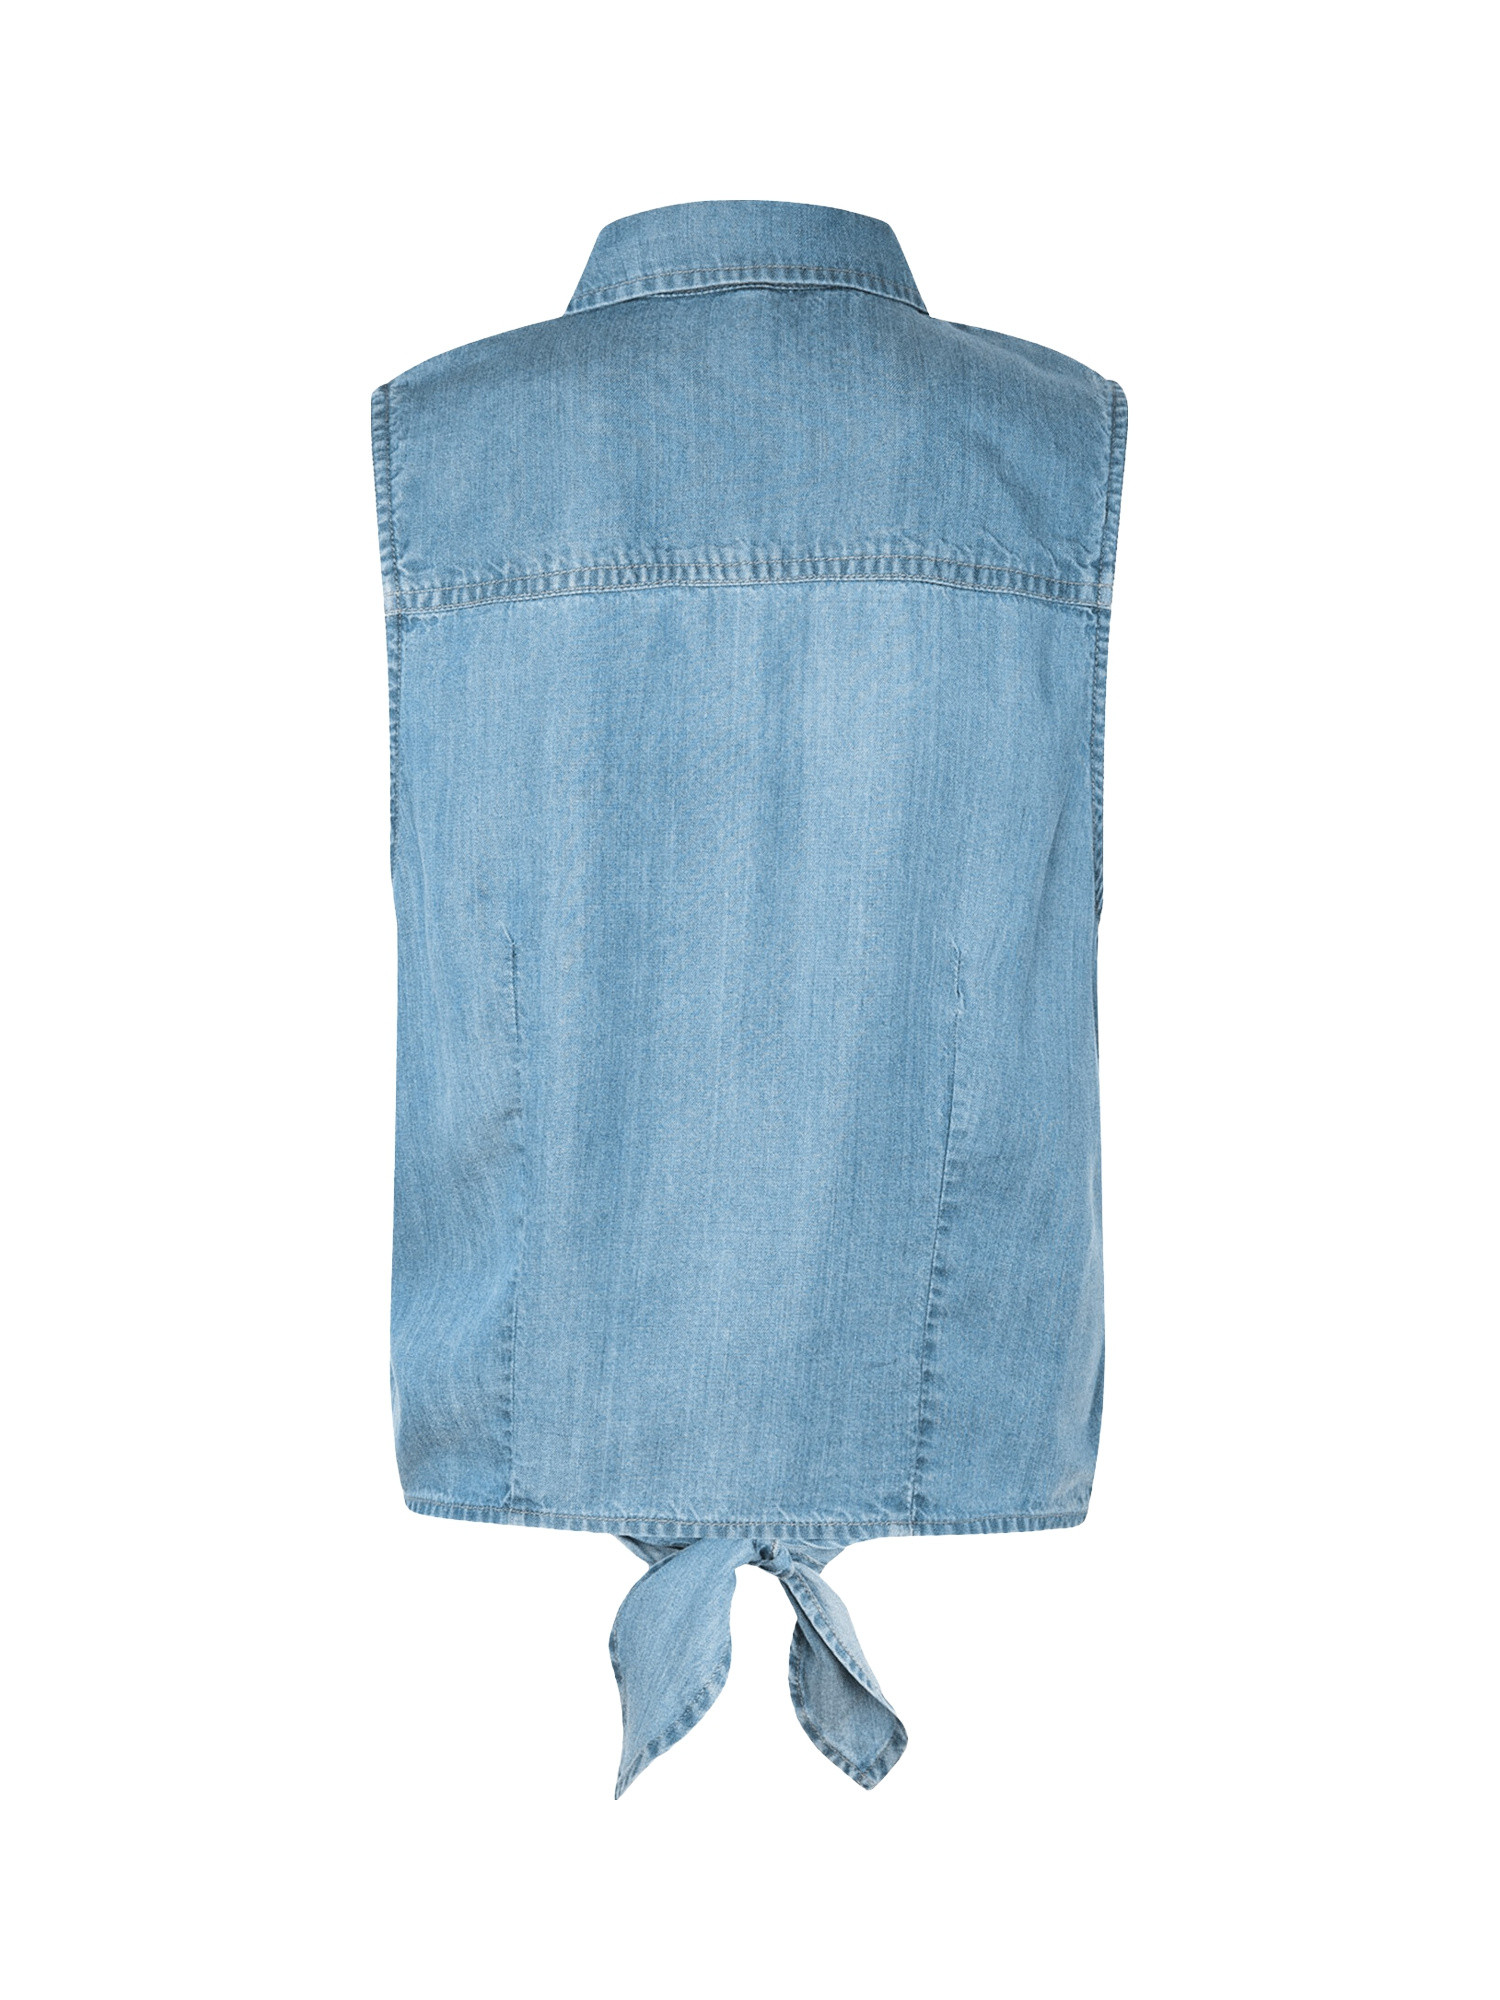 Pepe Jeans -  Camicia smanicata regular fit, Denim, large image number 1